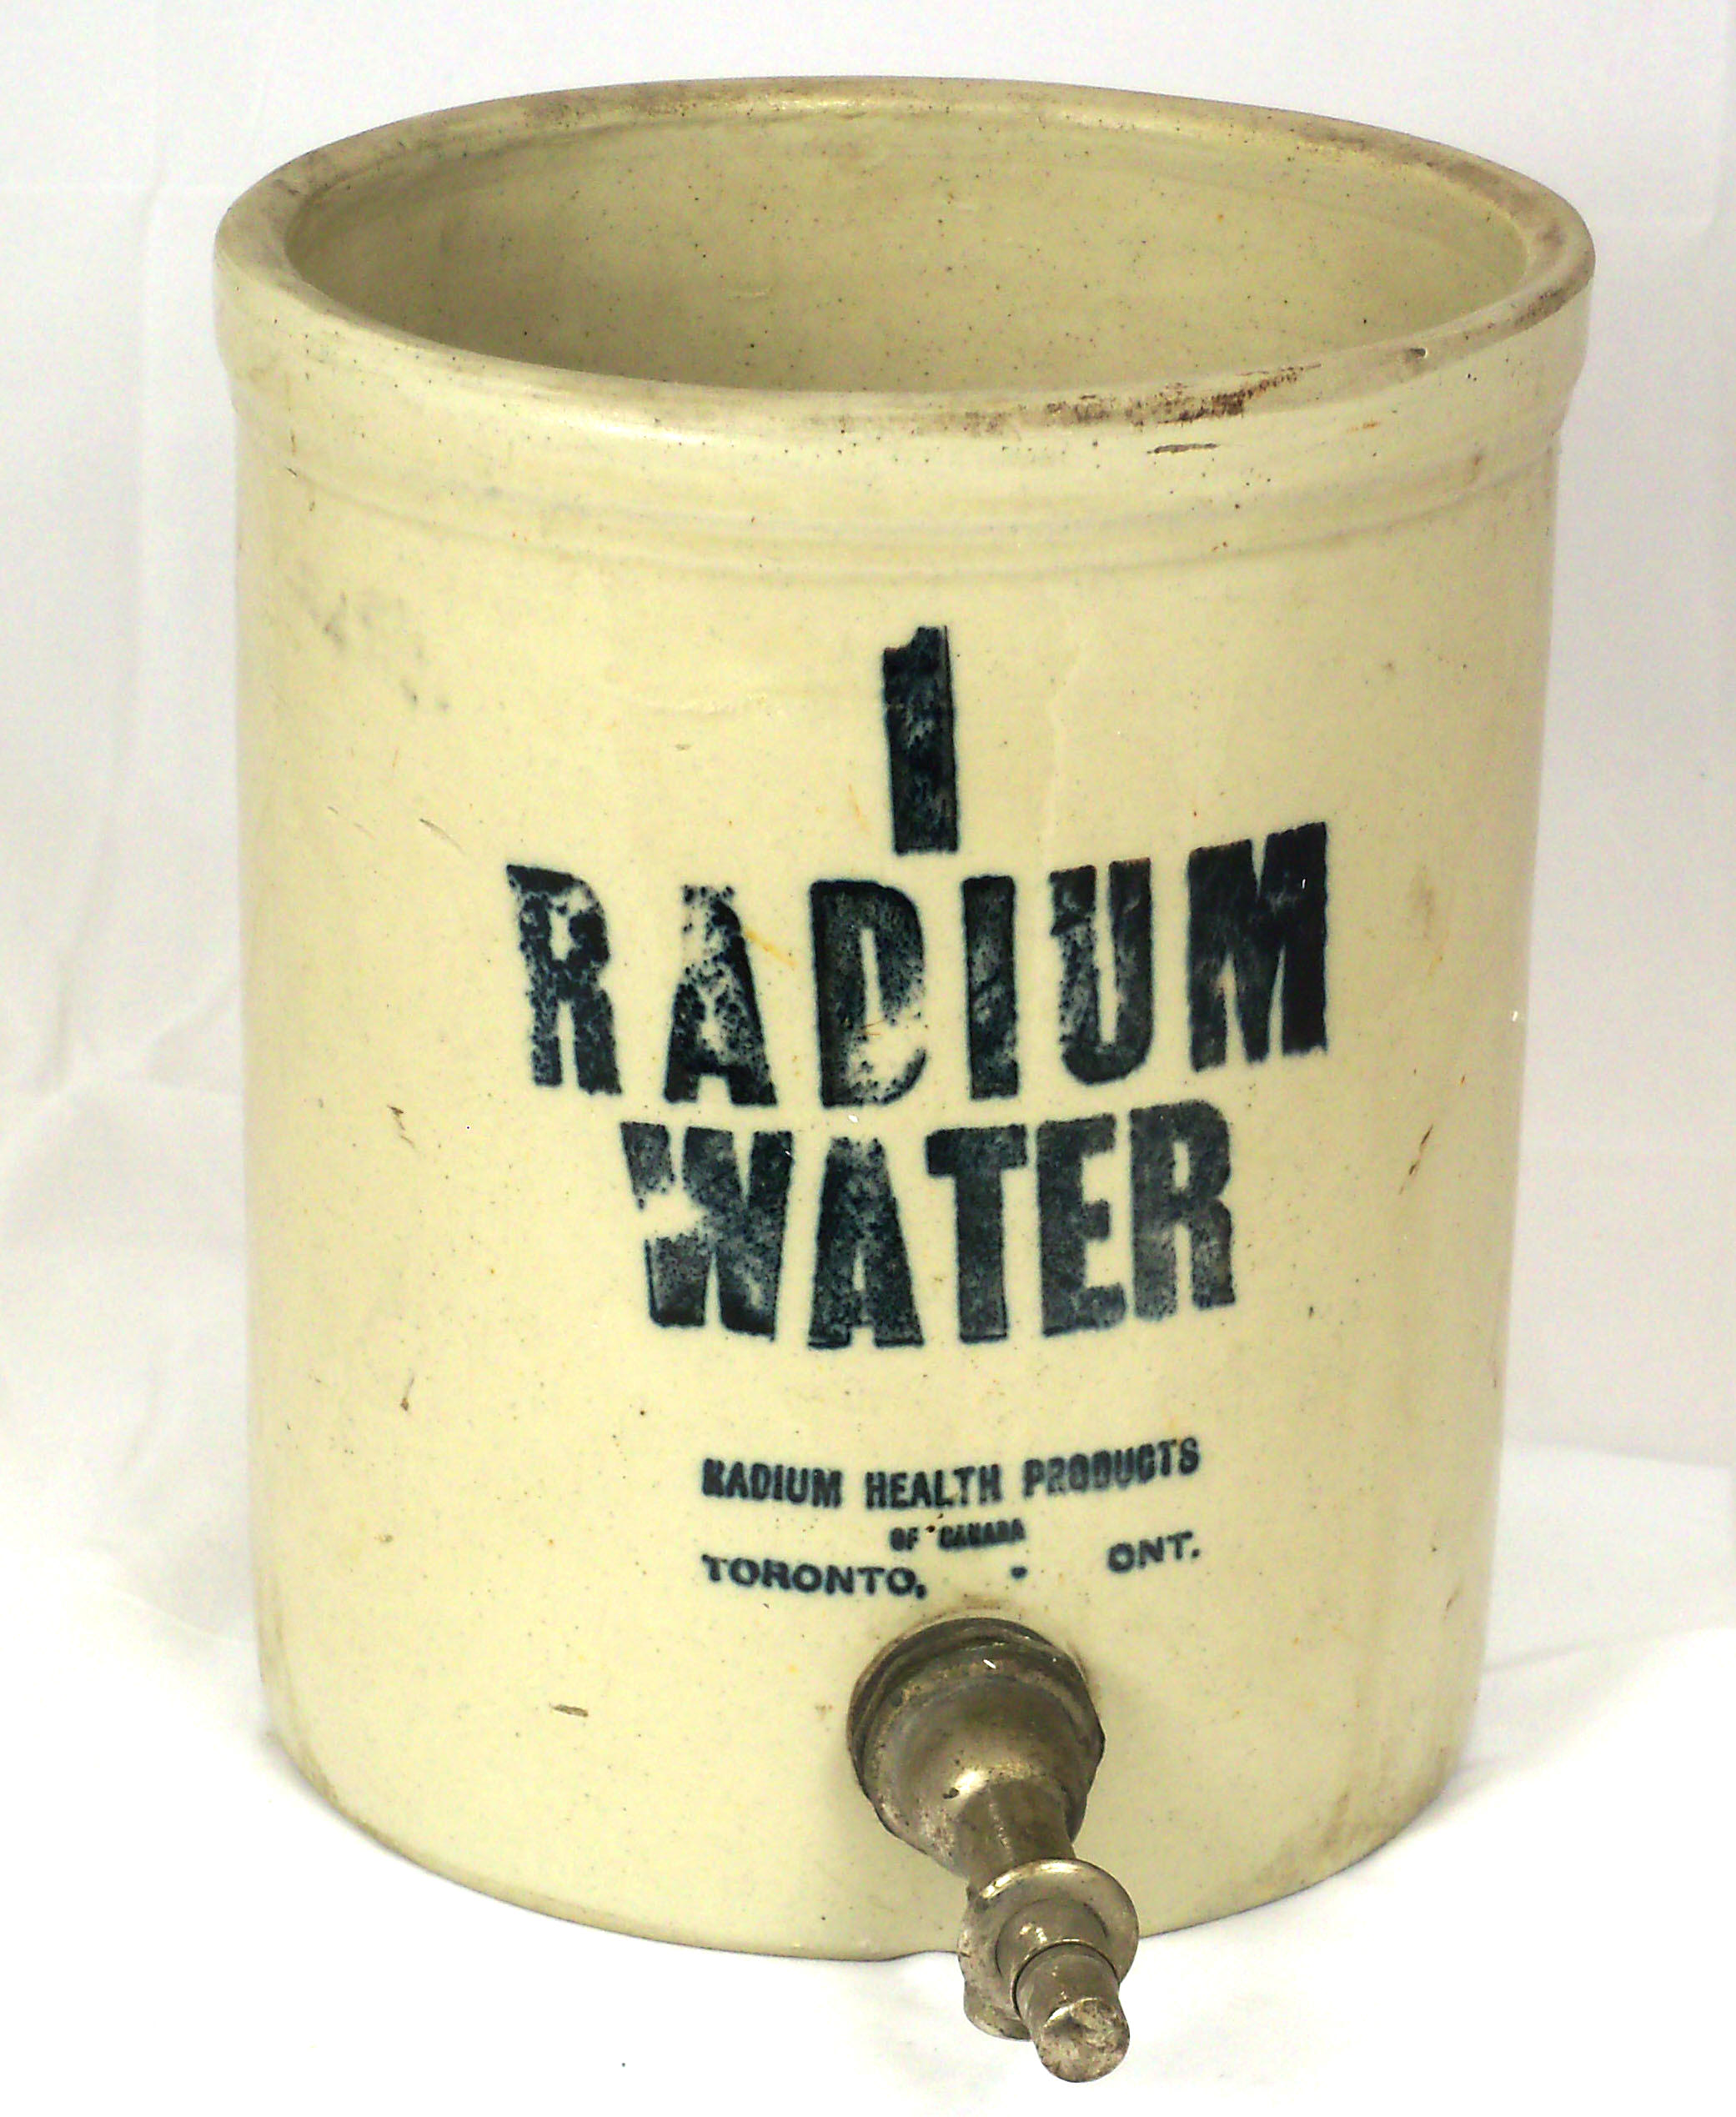 Radium Water Jars (late 1920s, early 1930s)